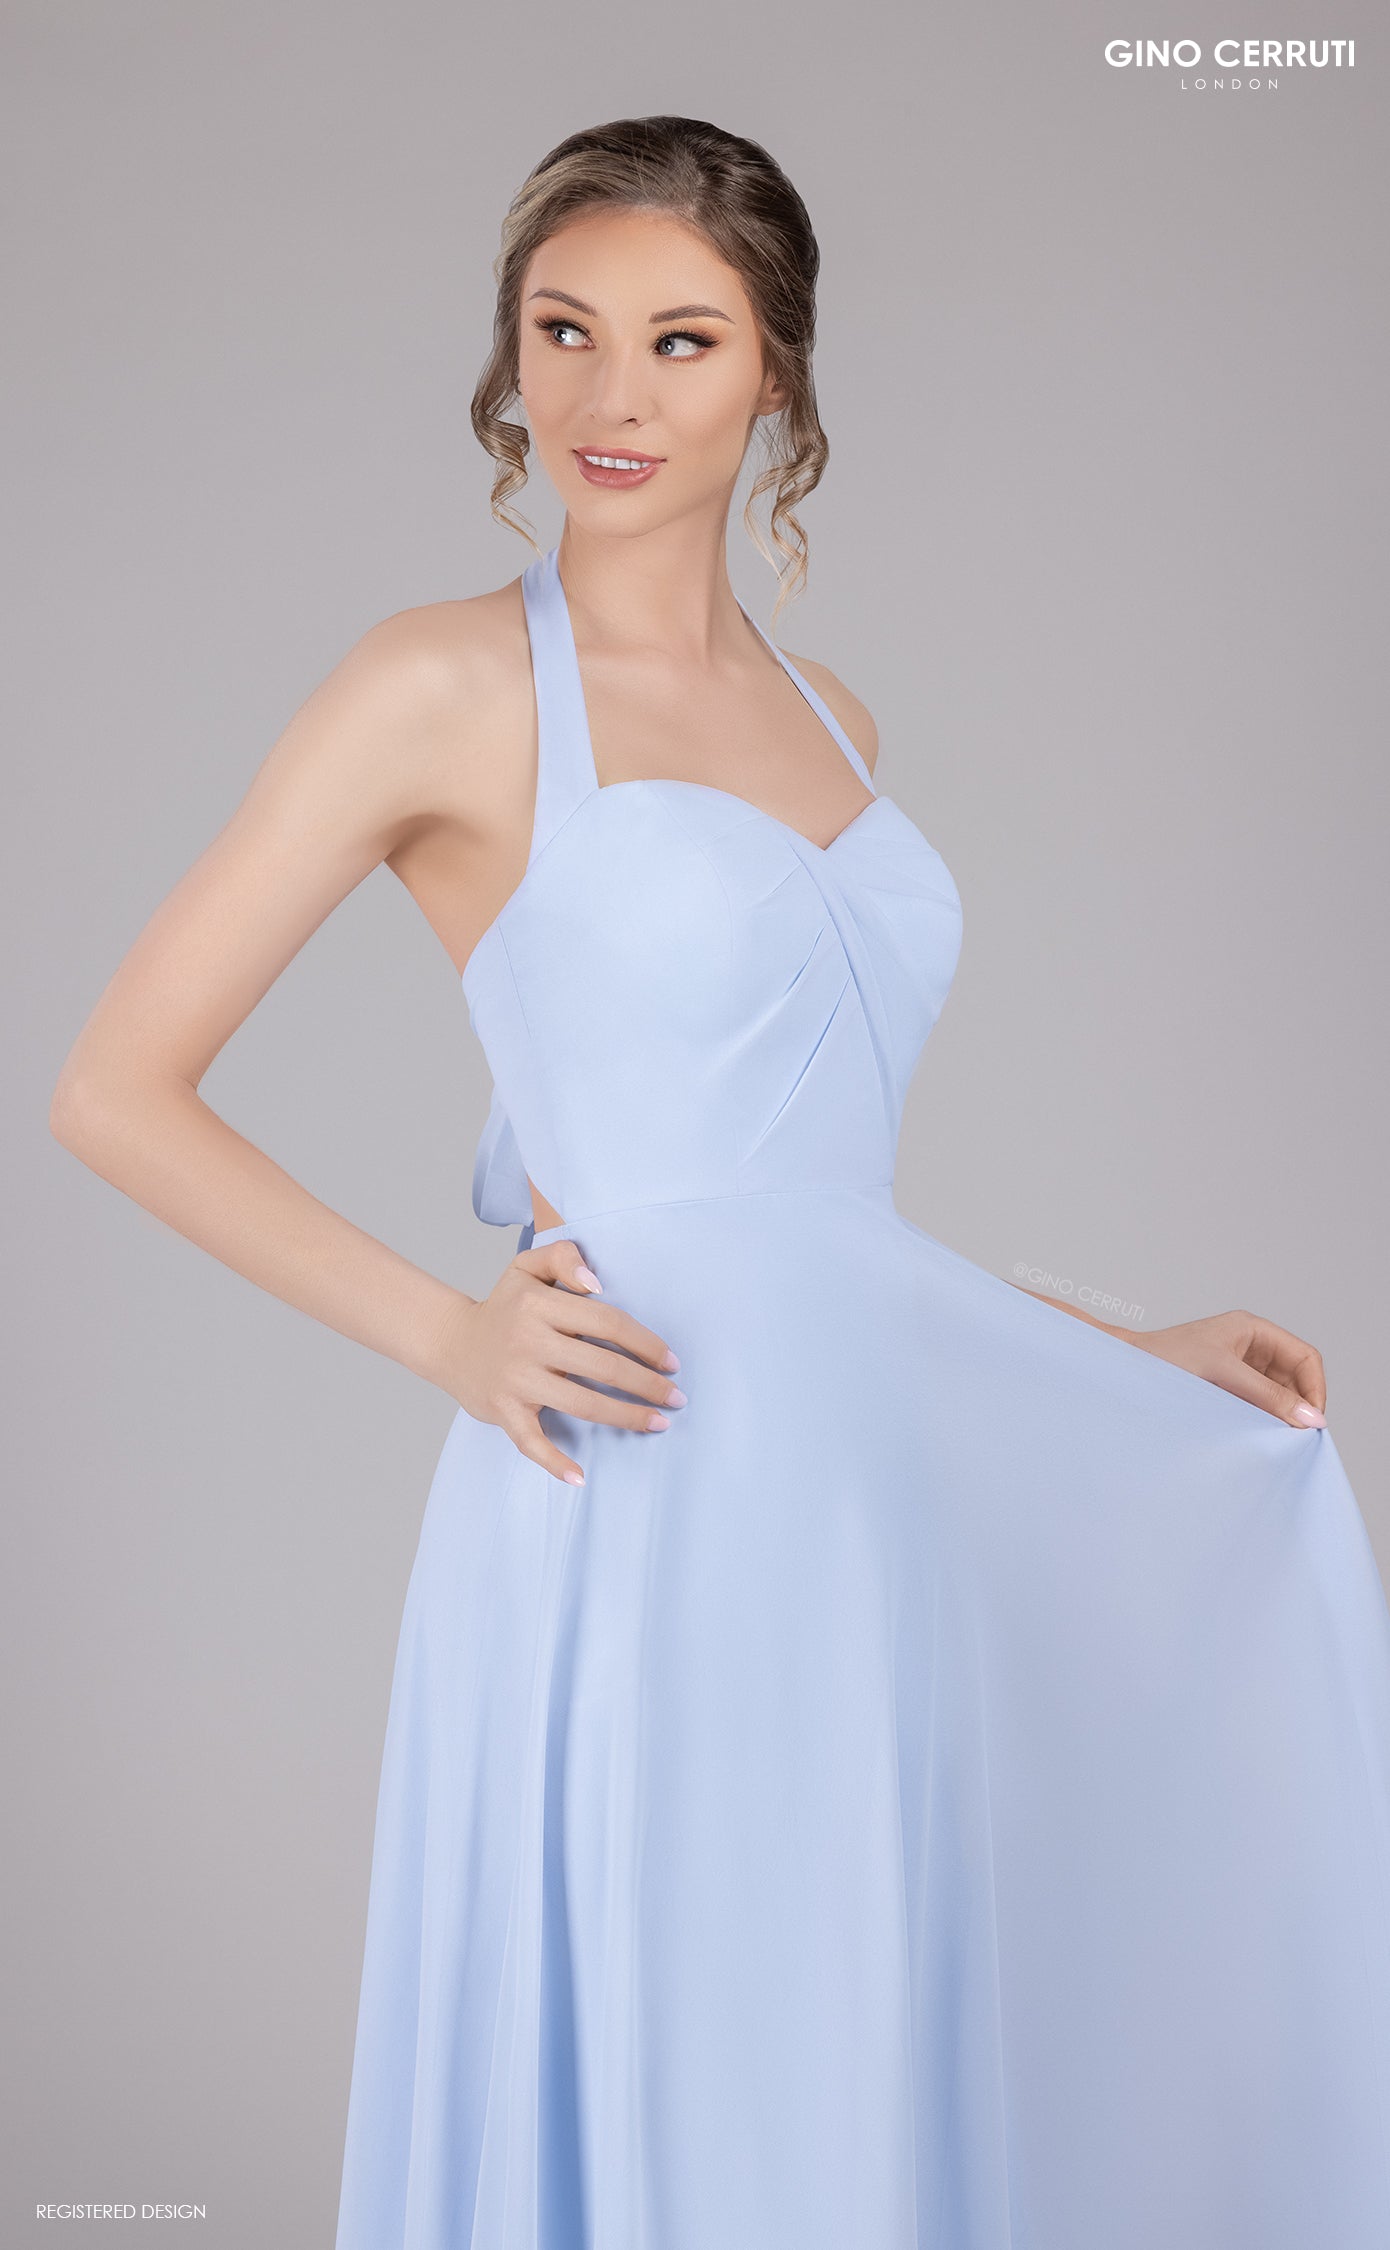 Prom Evening Dress - 4131H - LAST ONE